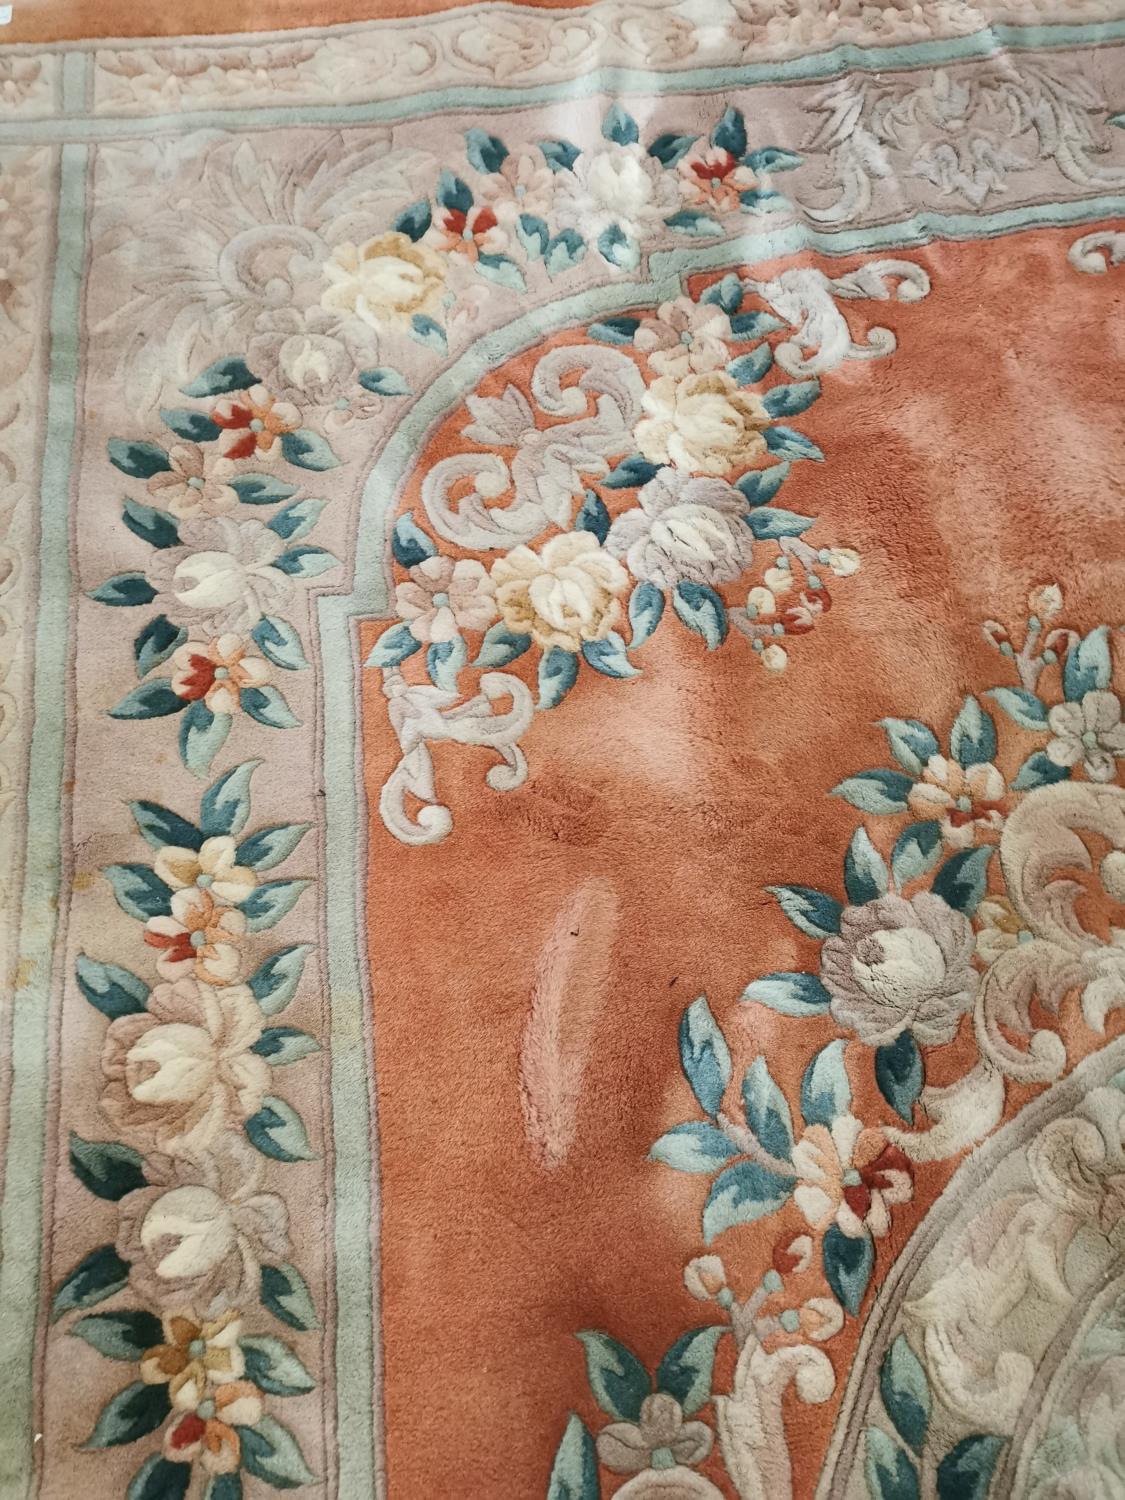 Good quality decorative carpet square - Image 3 of 4